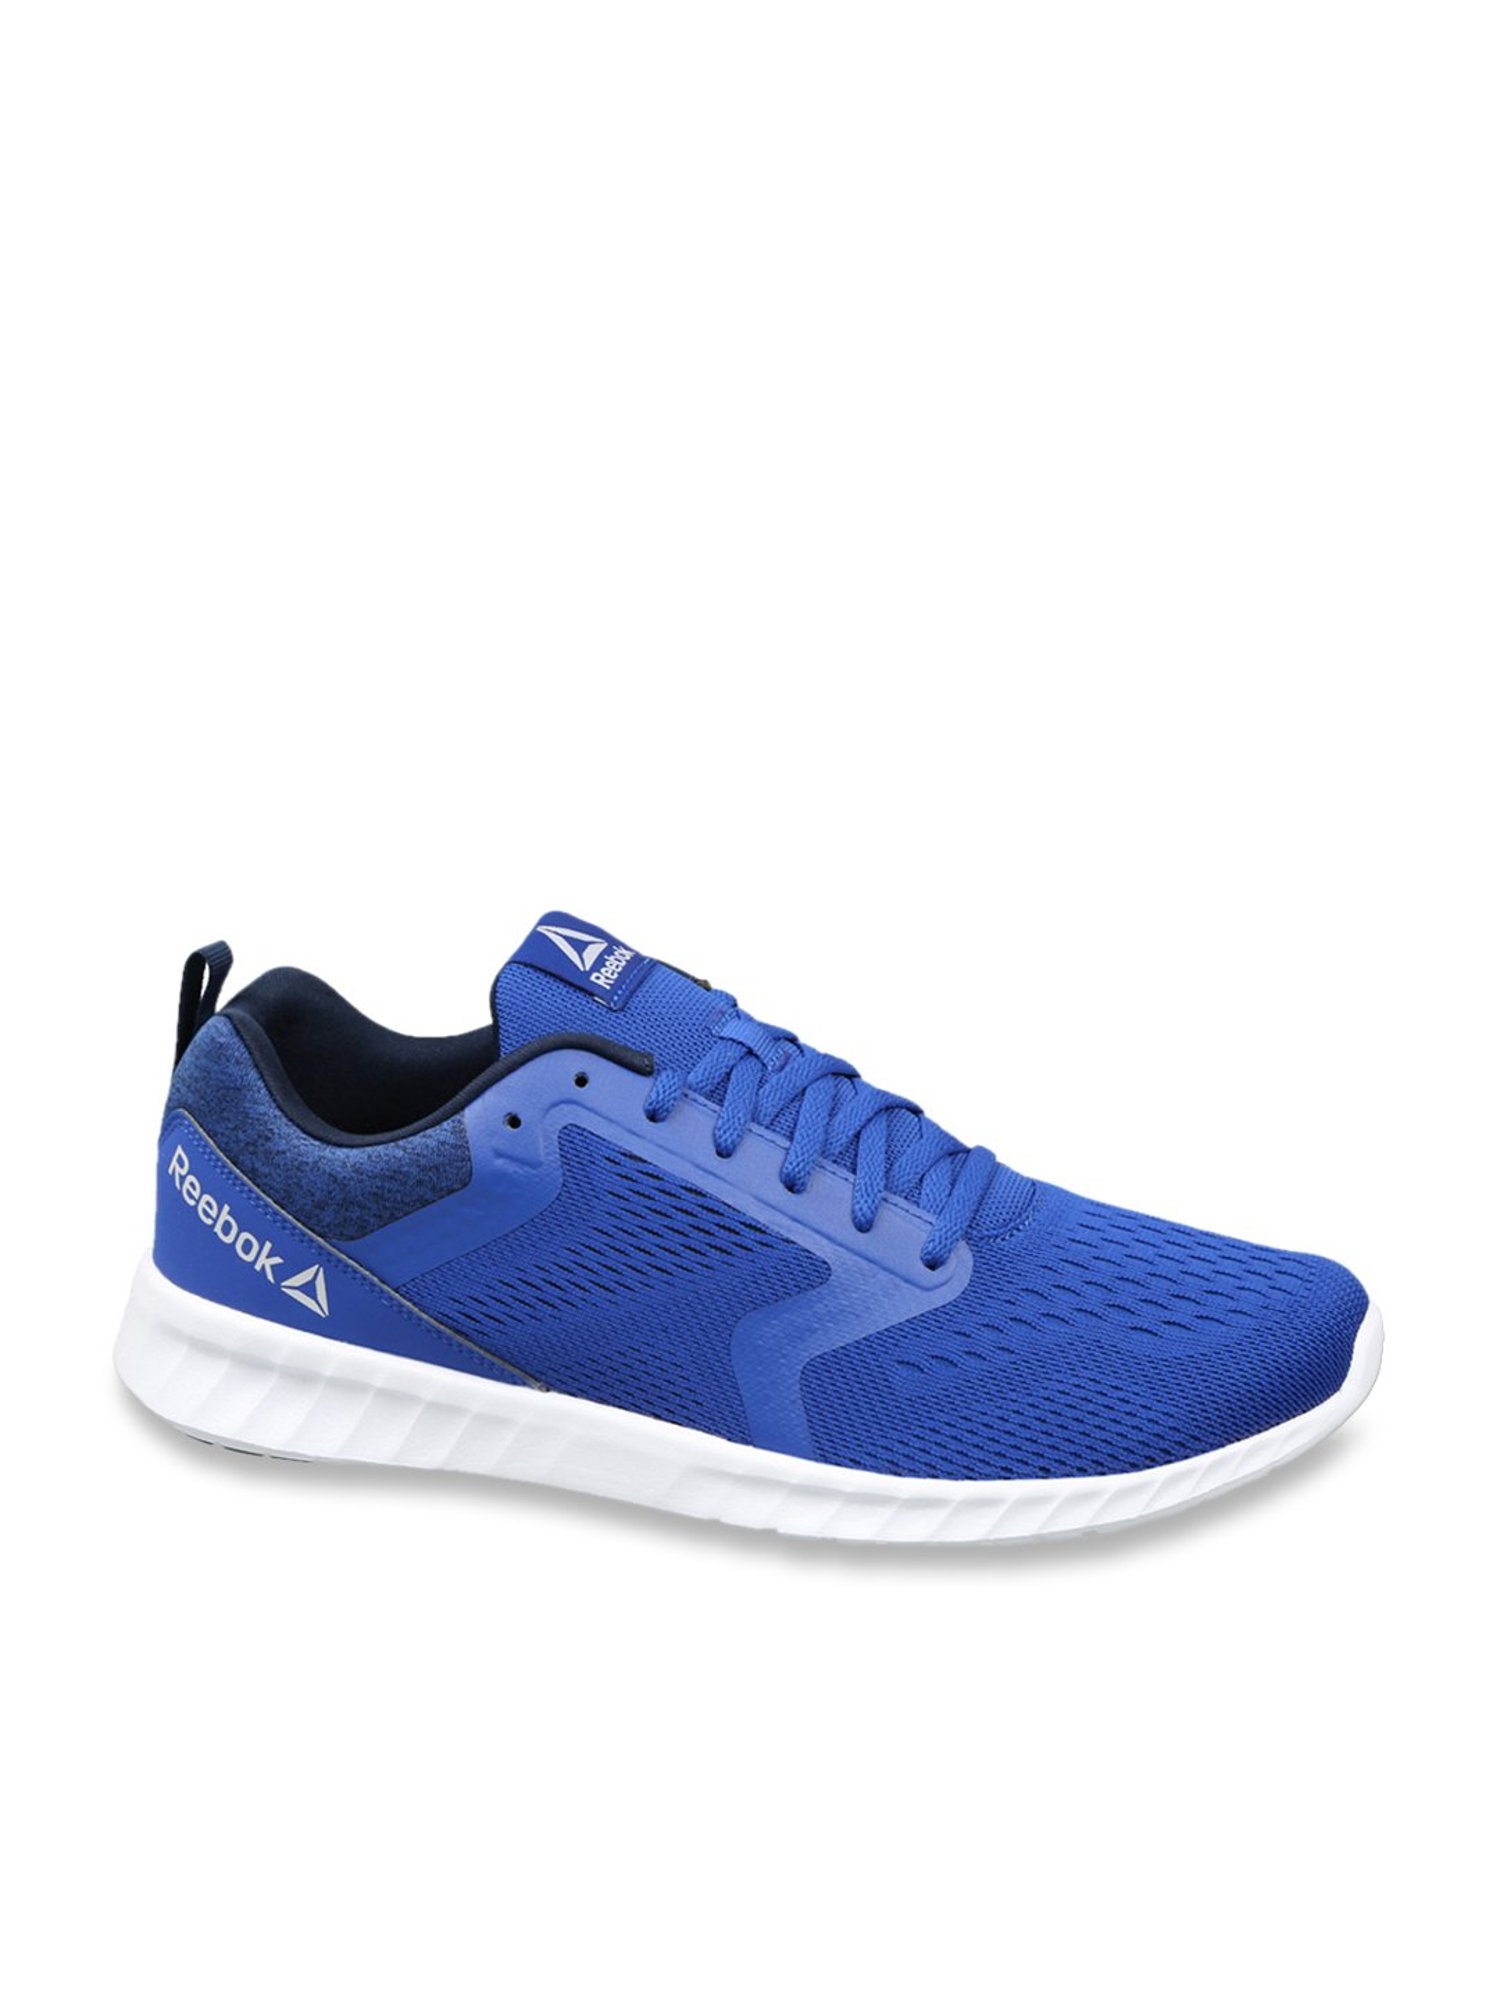 REEBOK Men Blue Woven Design Running Shoes Running Shoes For Men Buy ...